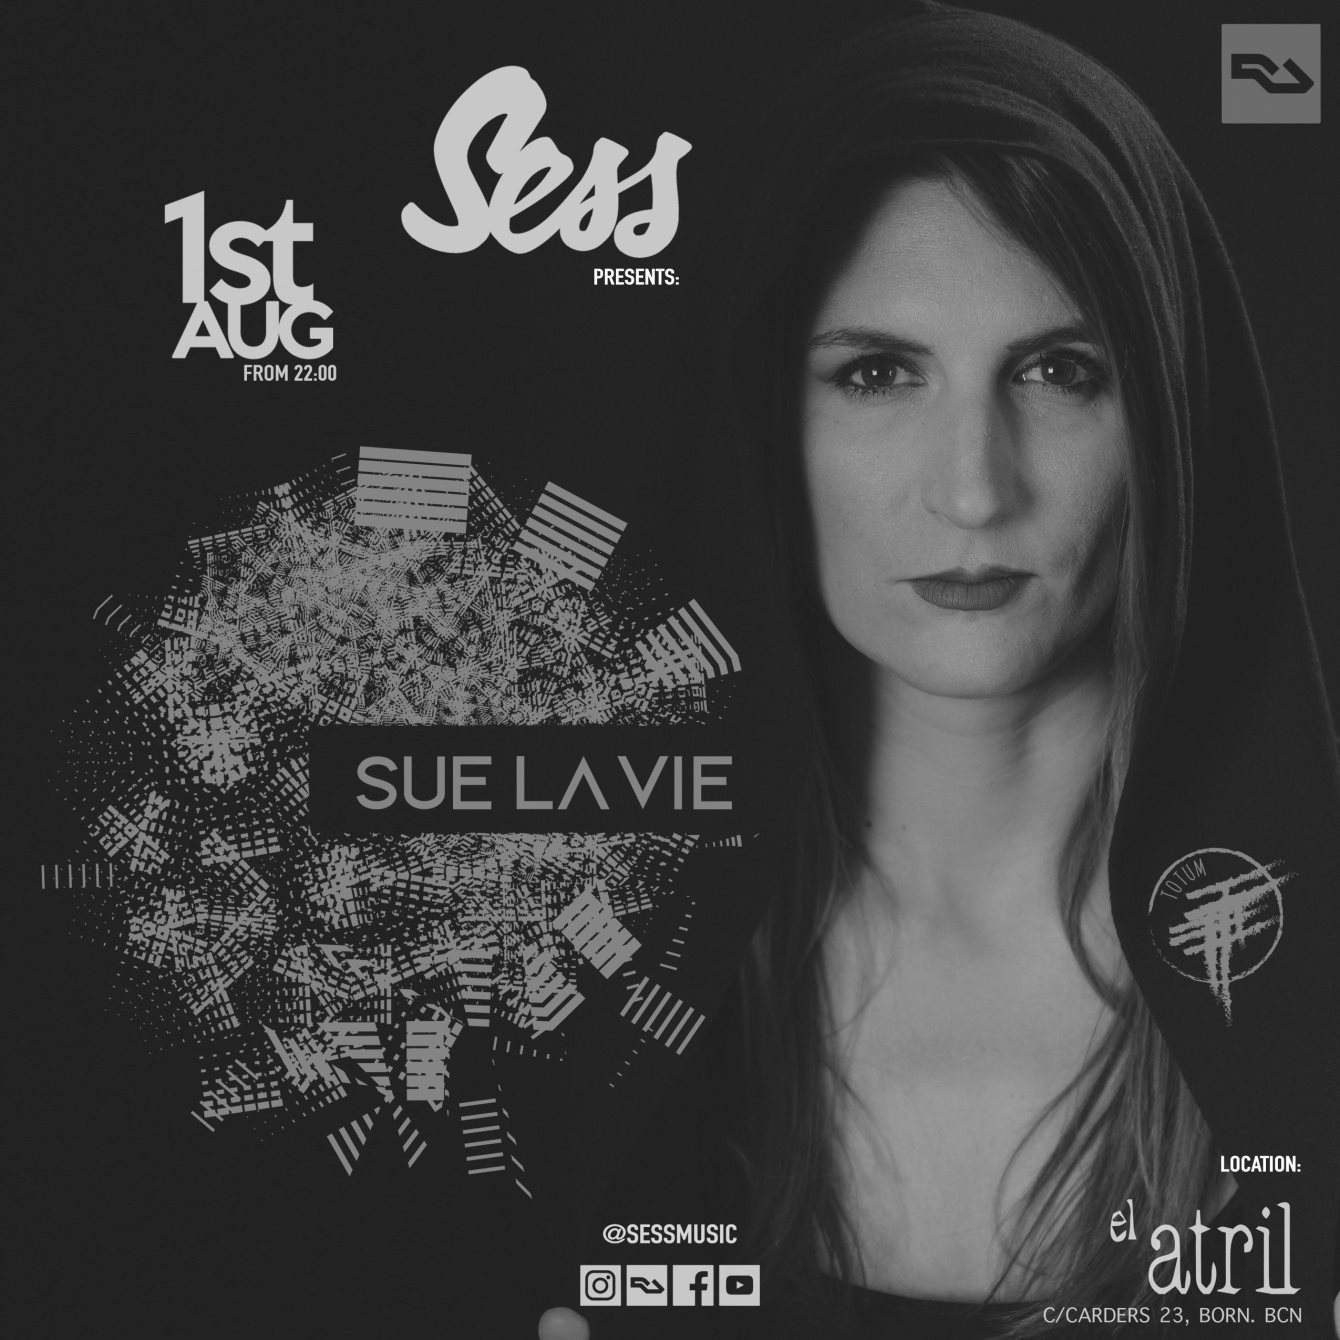 [CANCELLED] Sess presents: SUE LA VIE - フライヤー表